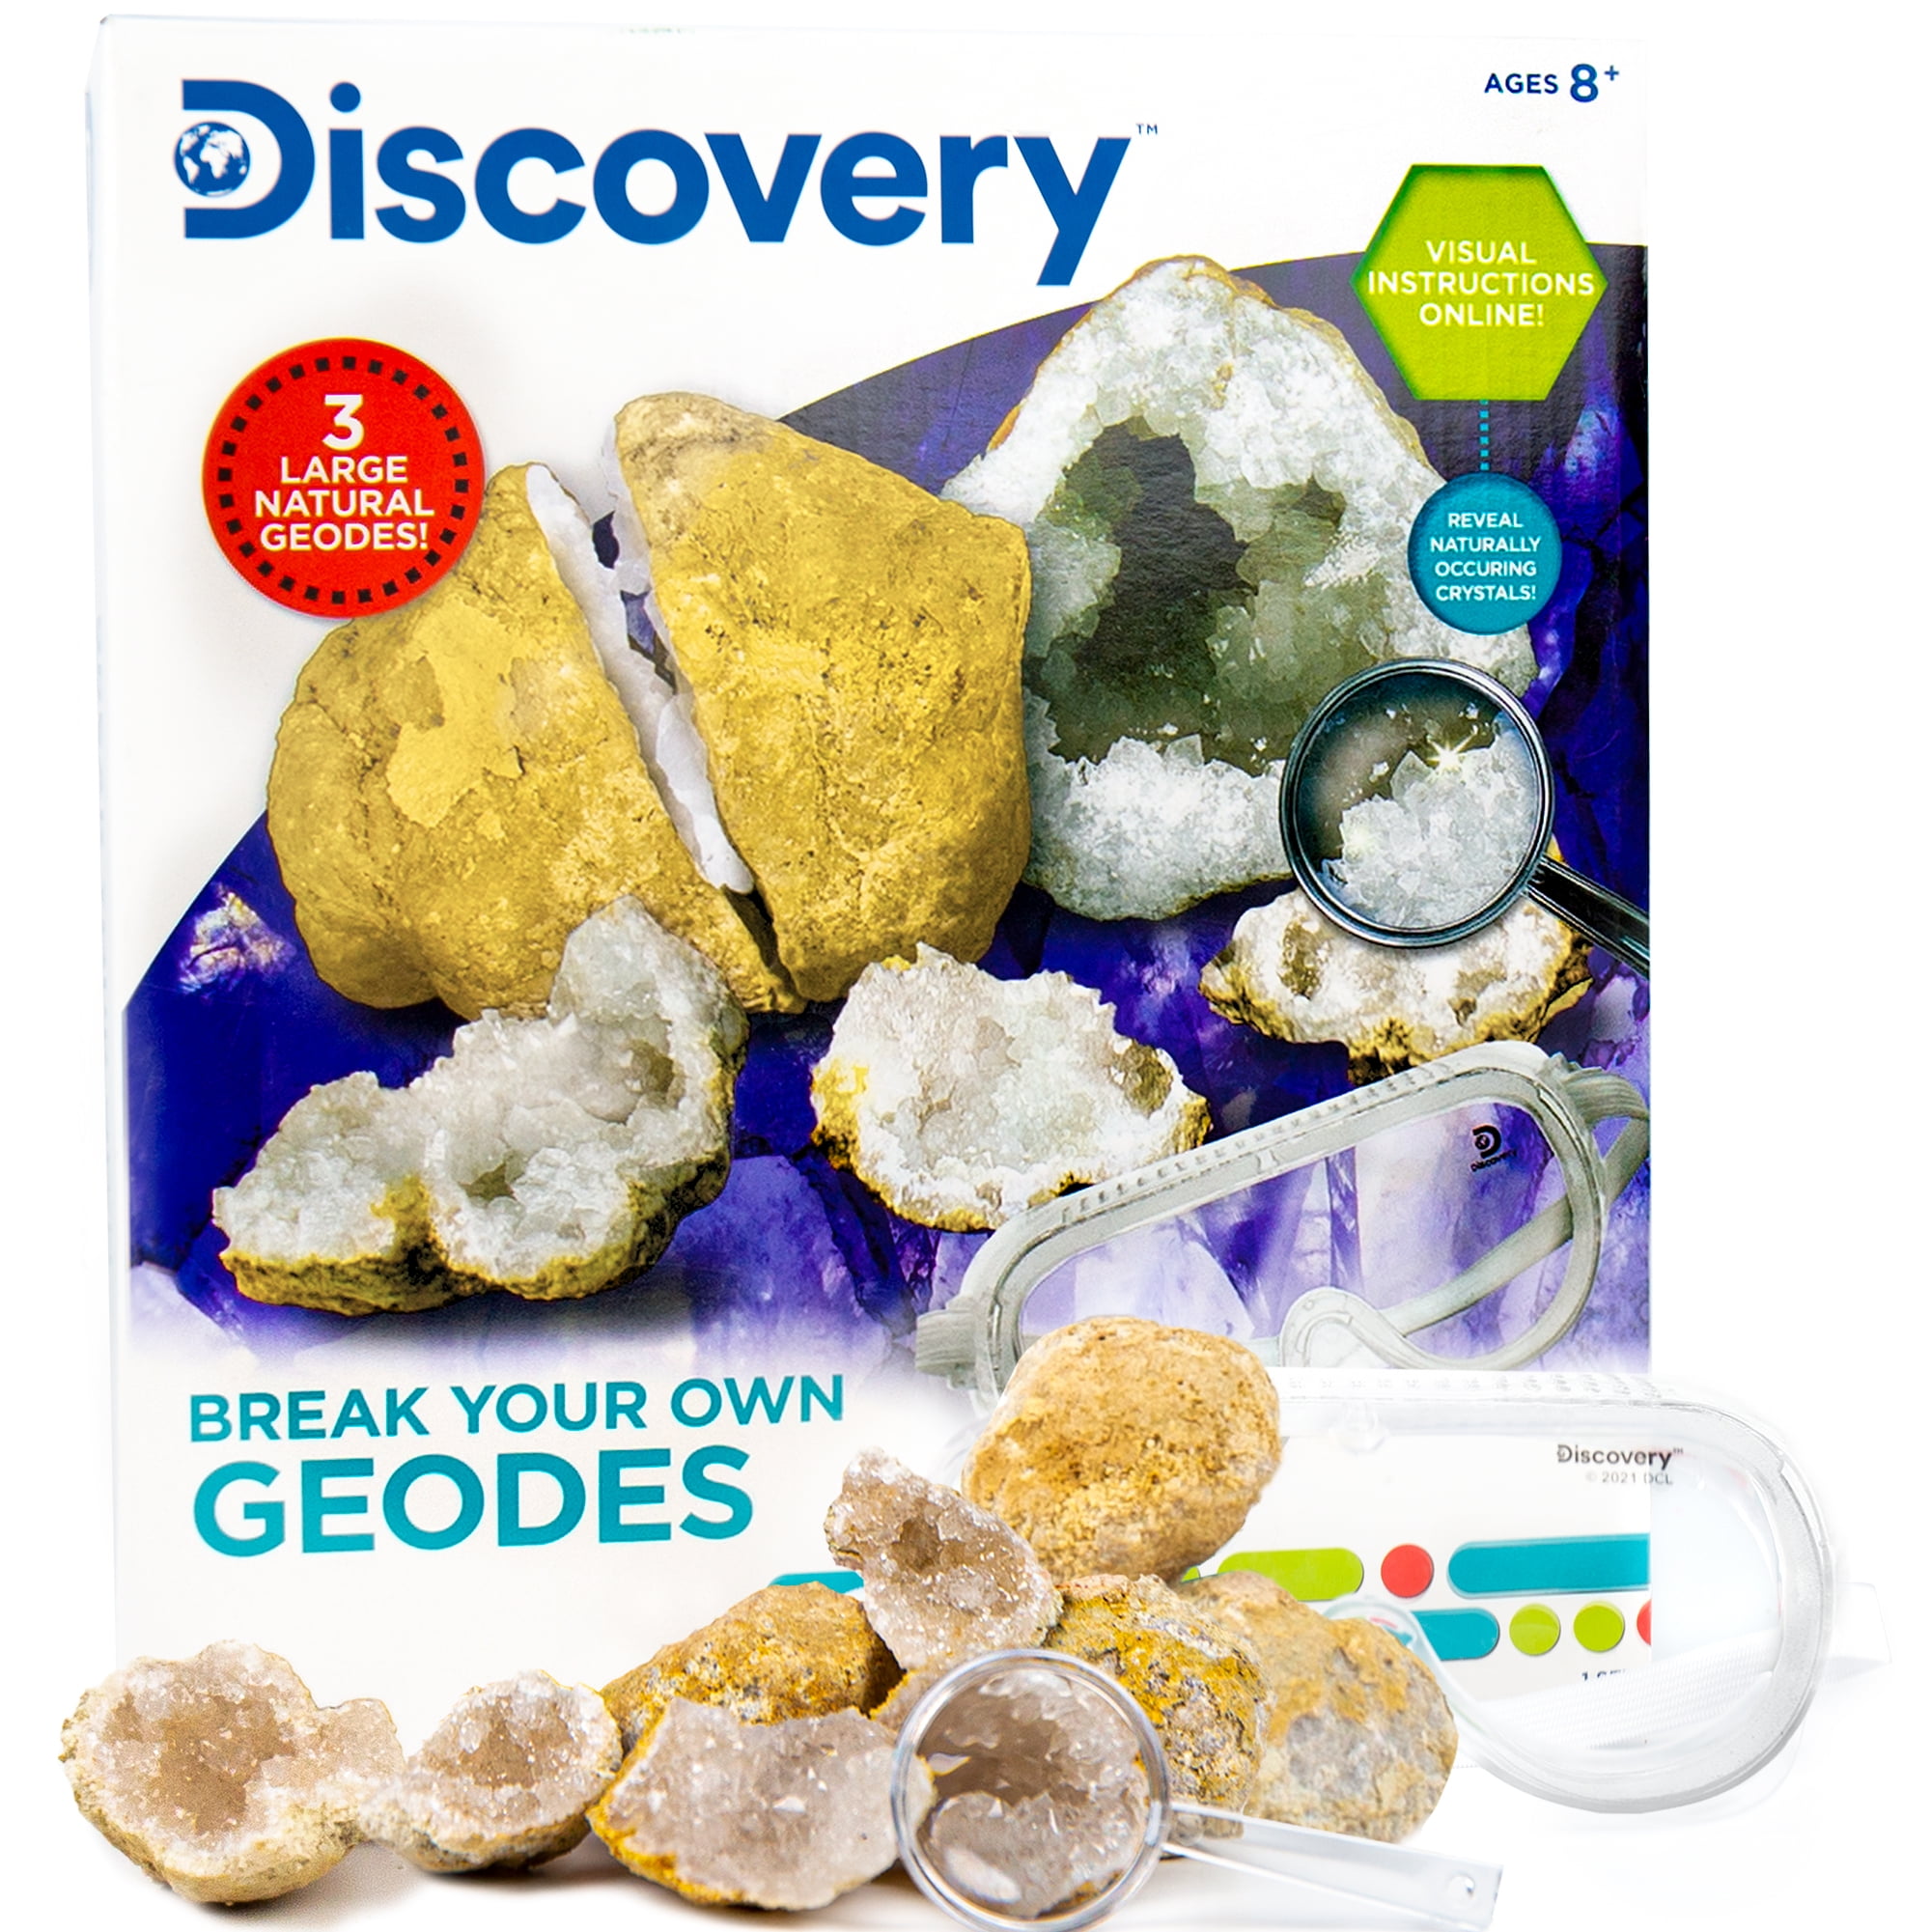 Discovery Kids Crystal Growing Aquarium Kit Magic Rocks for sale online 